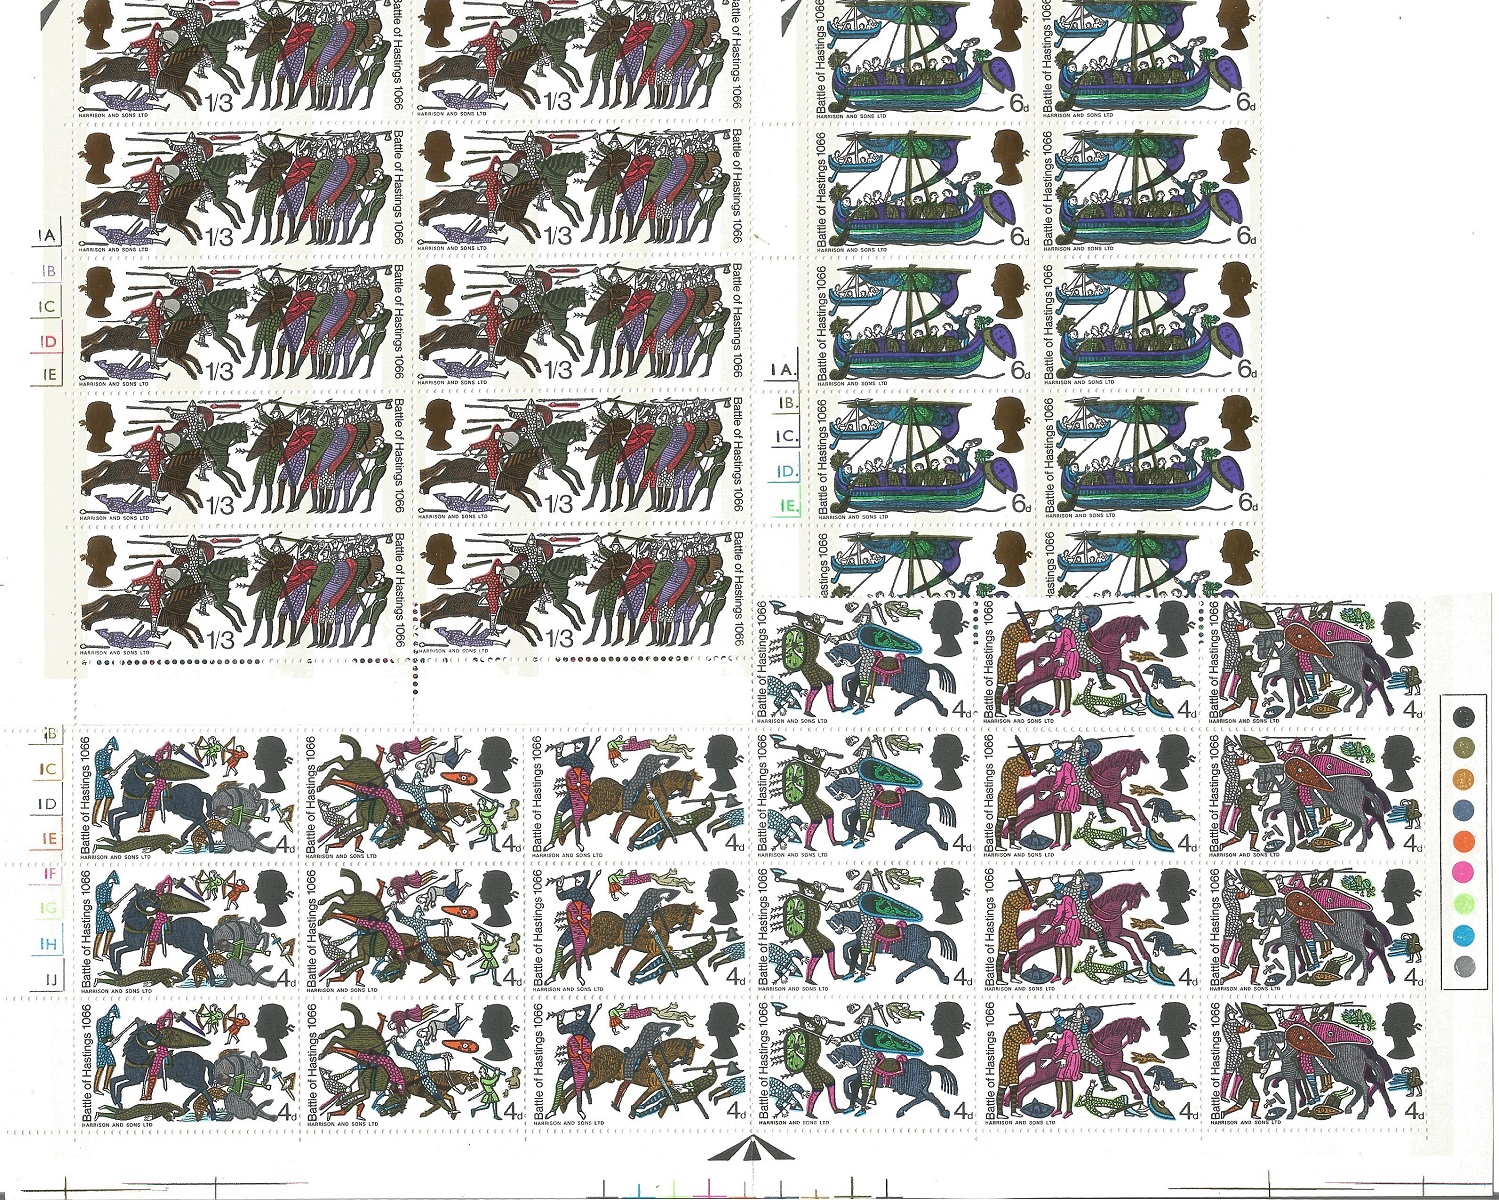 GB mint Stamps Pre-Decimal 1066 Hastings (Phos) in Cylinder Blocks 2 x 10 & 1 x 24, set in a